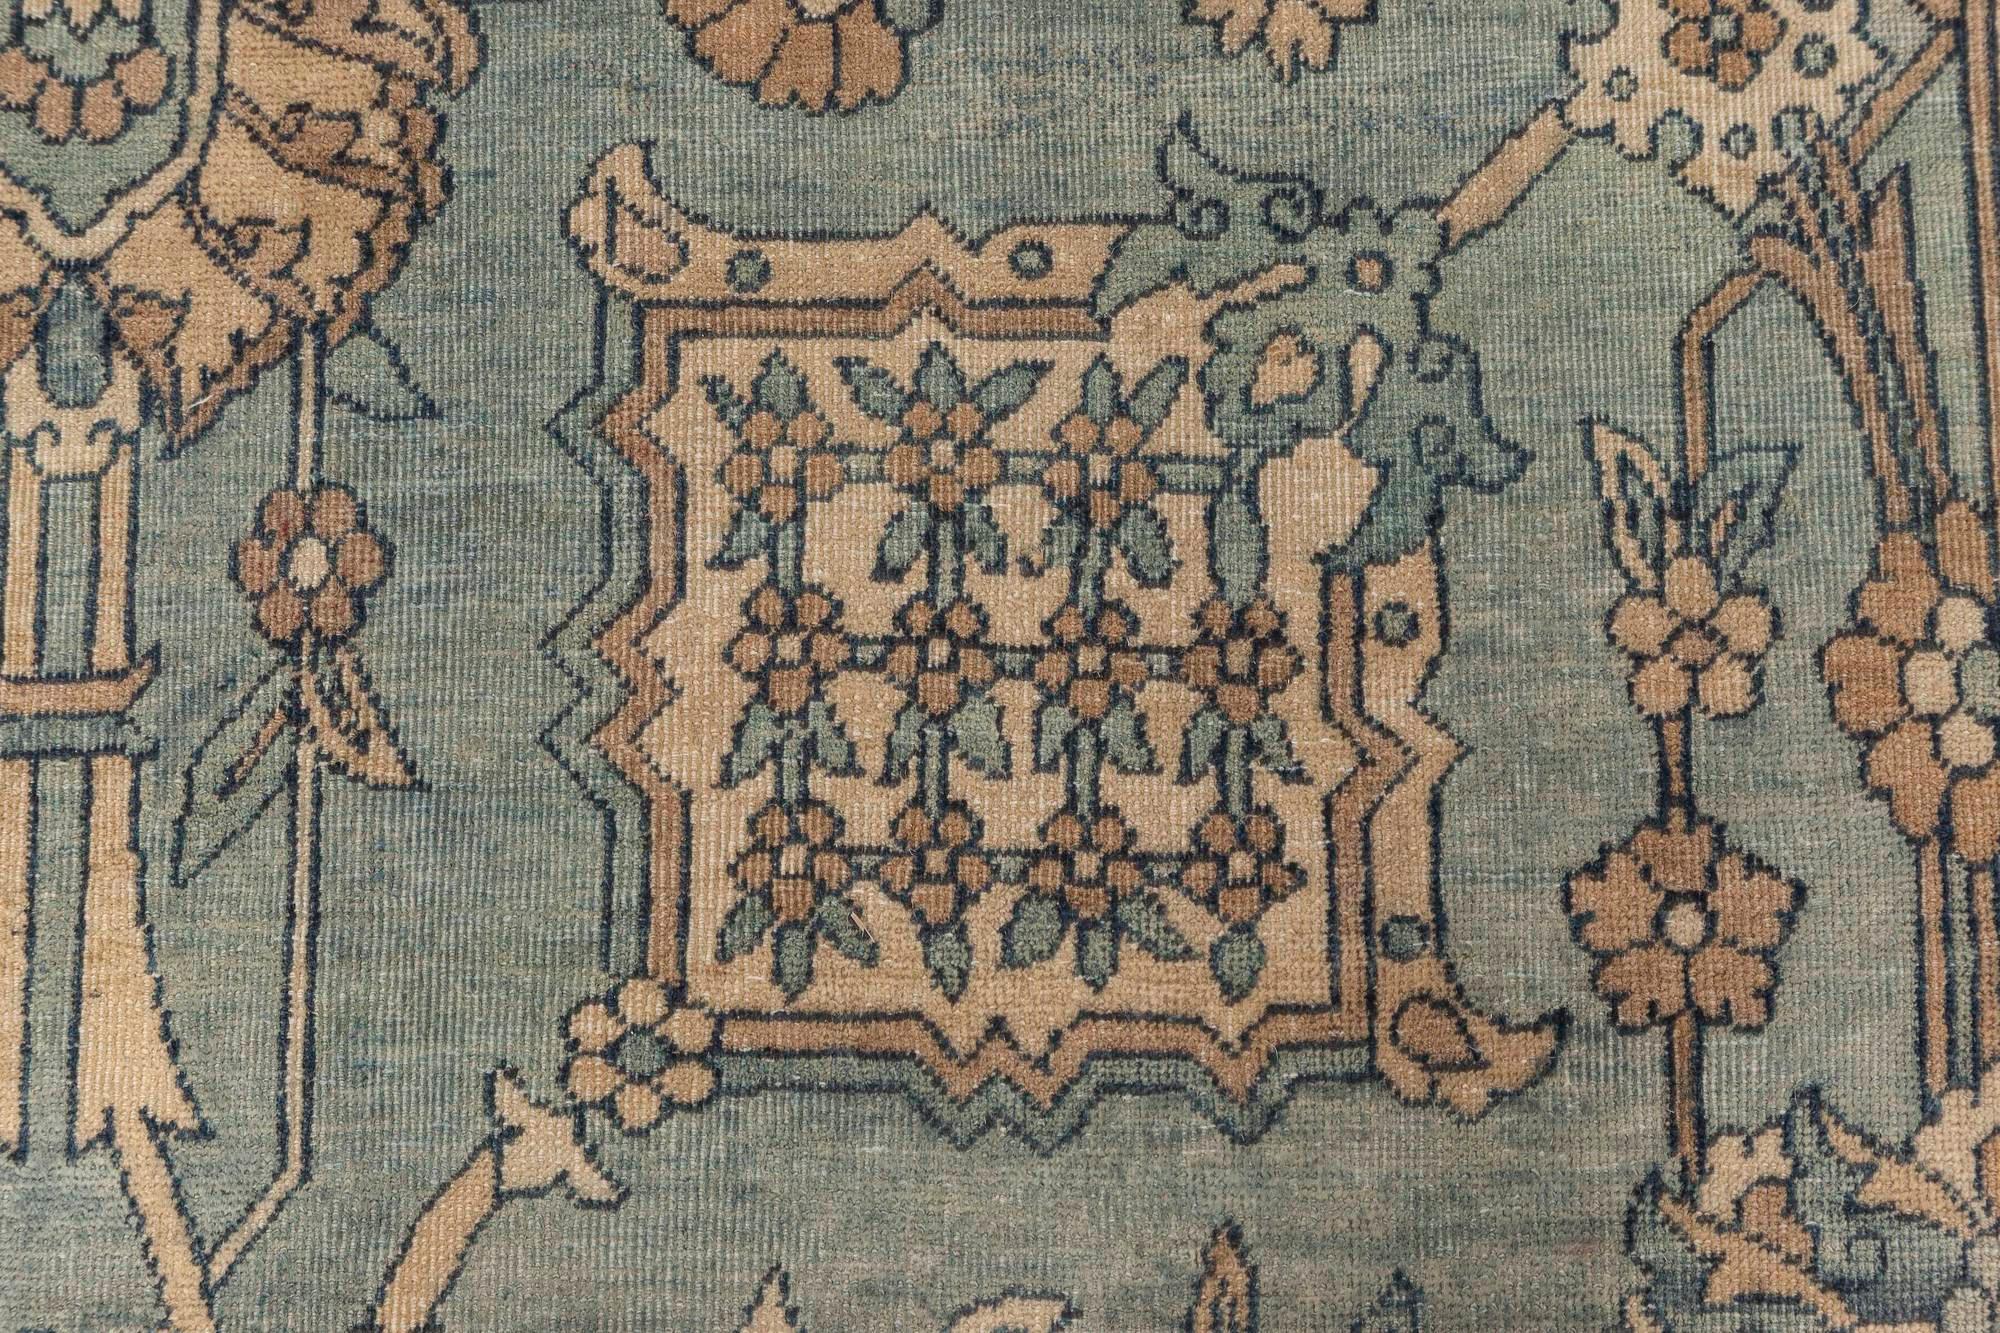 Blue antique Persian Kirman rug
Size: 11'6